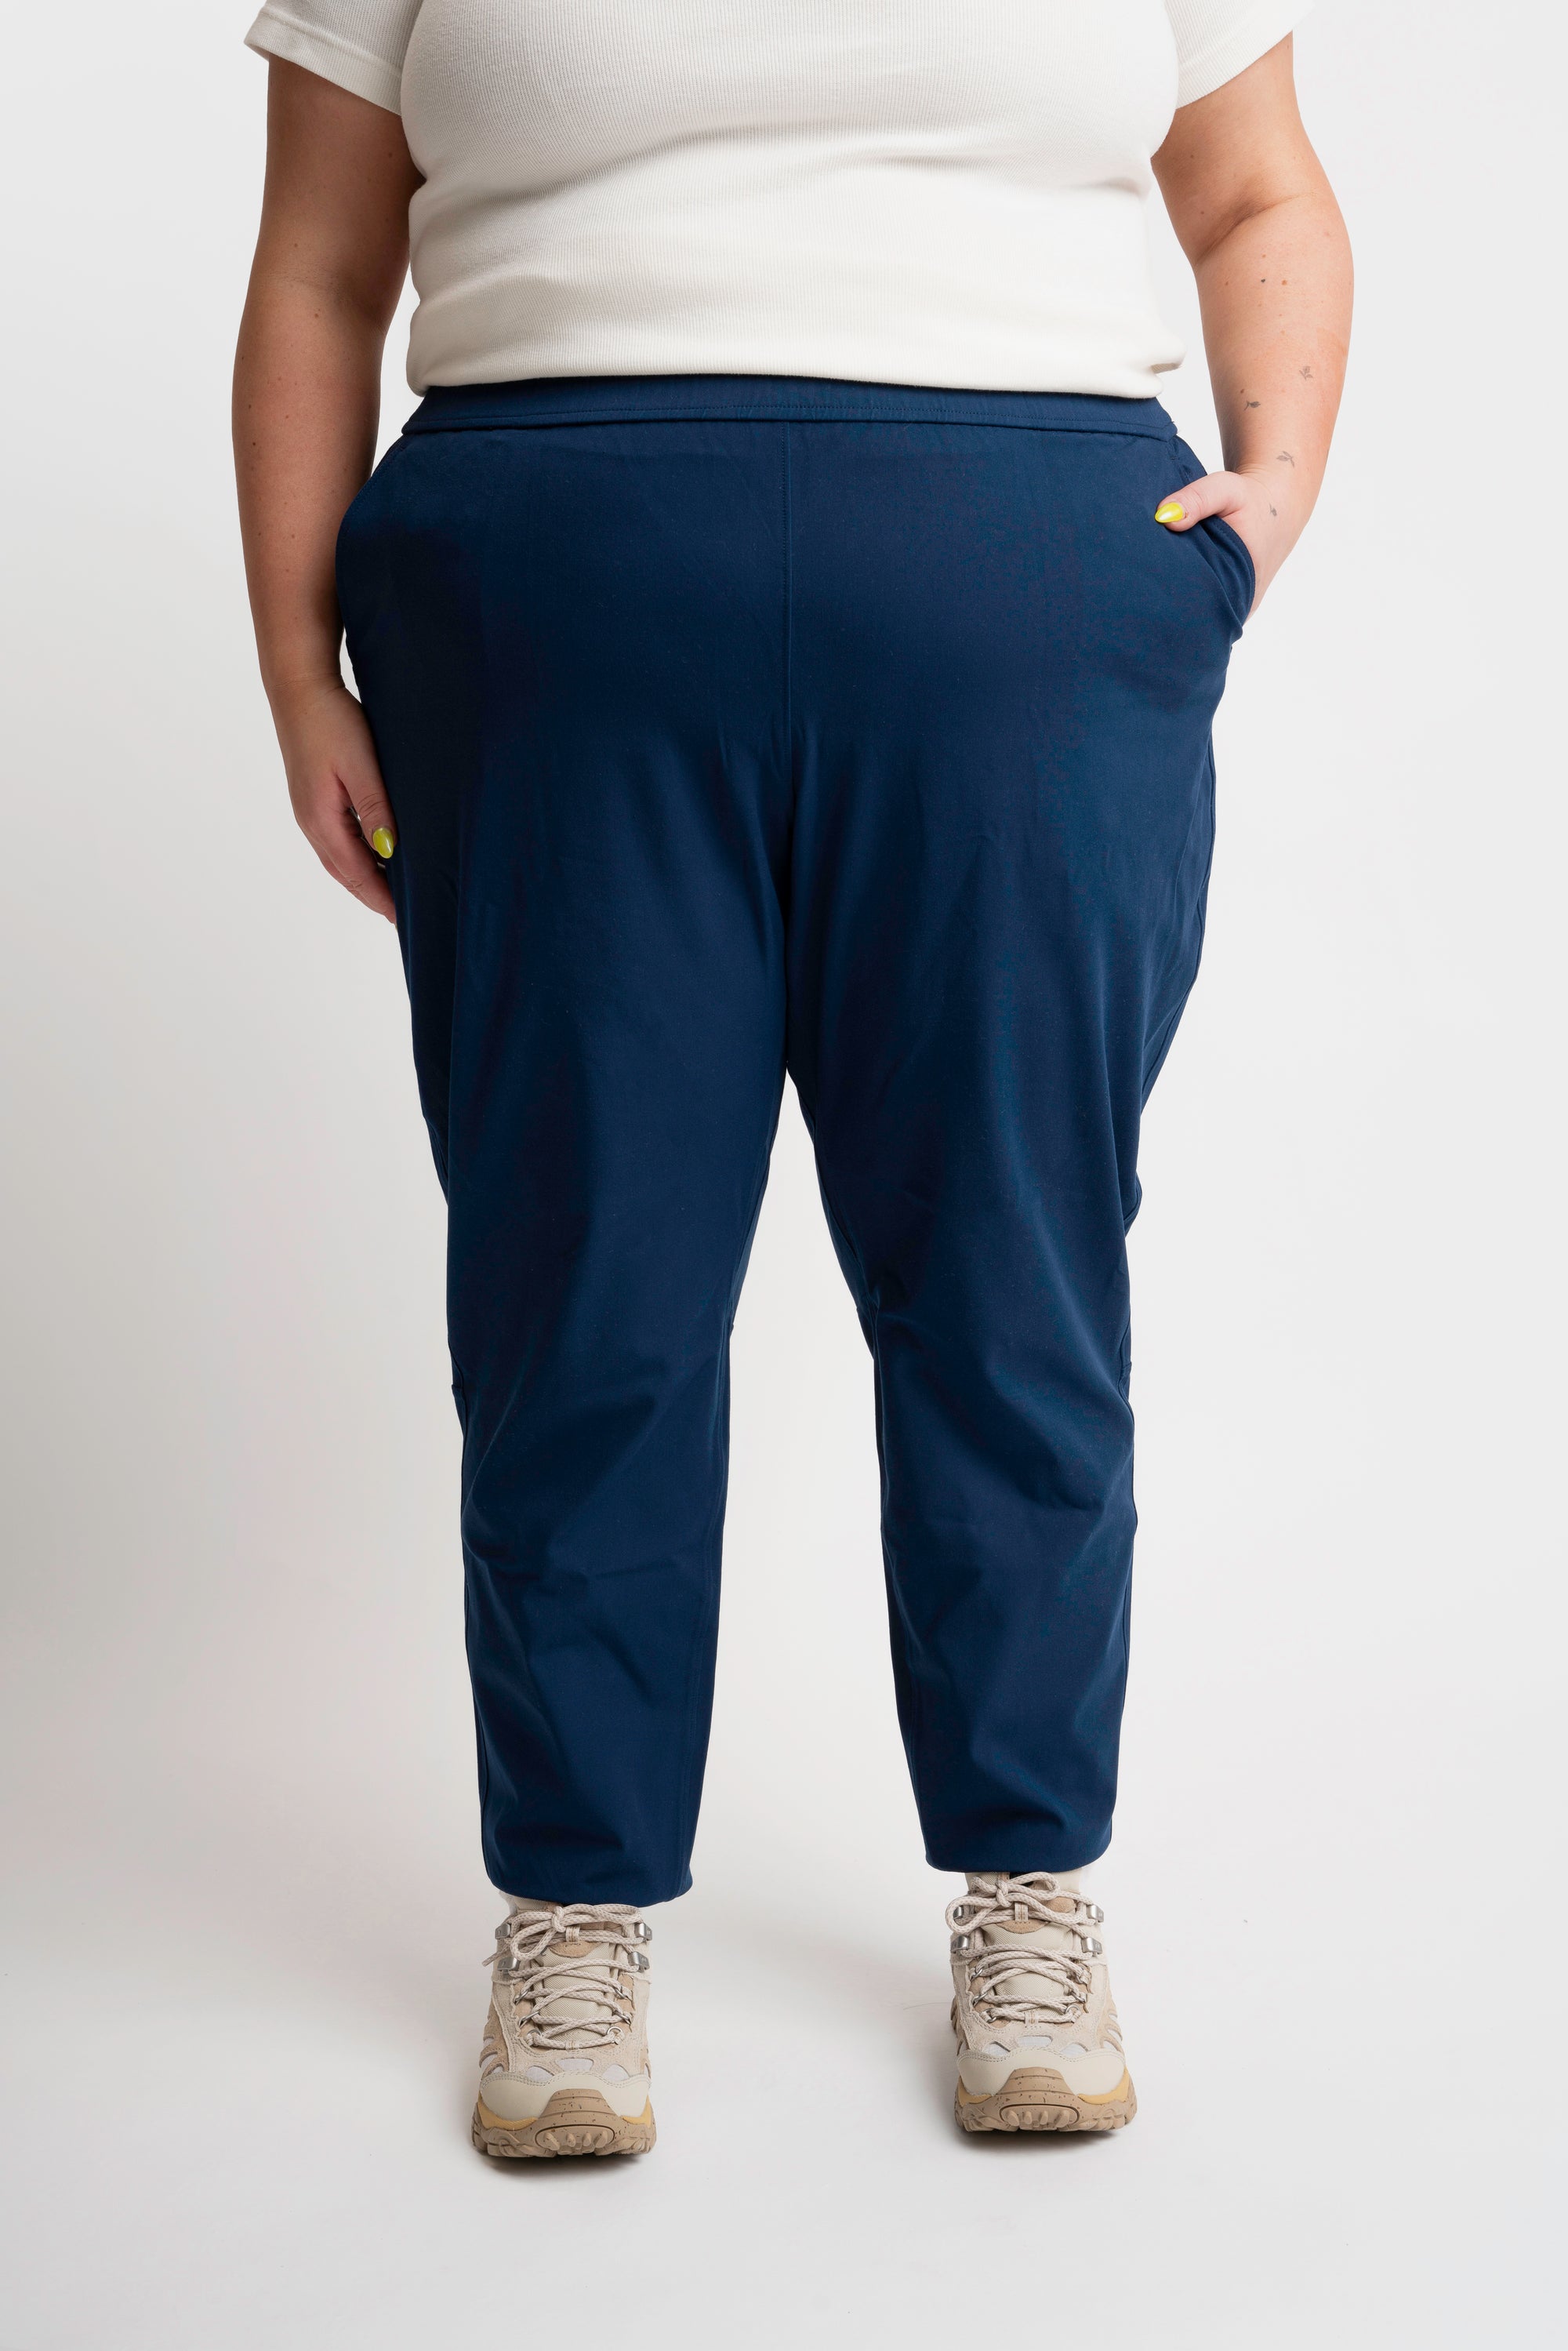 Women's XL activewear pants by Tangerine XL Blk/gray print 